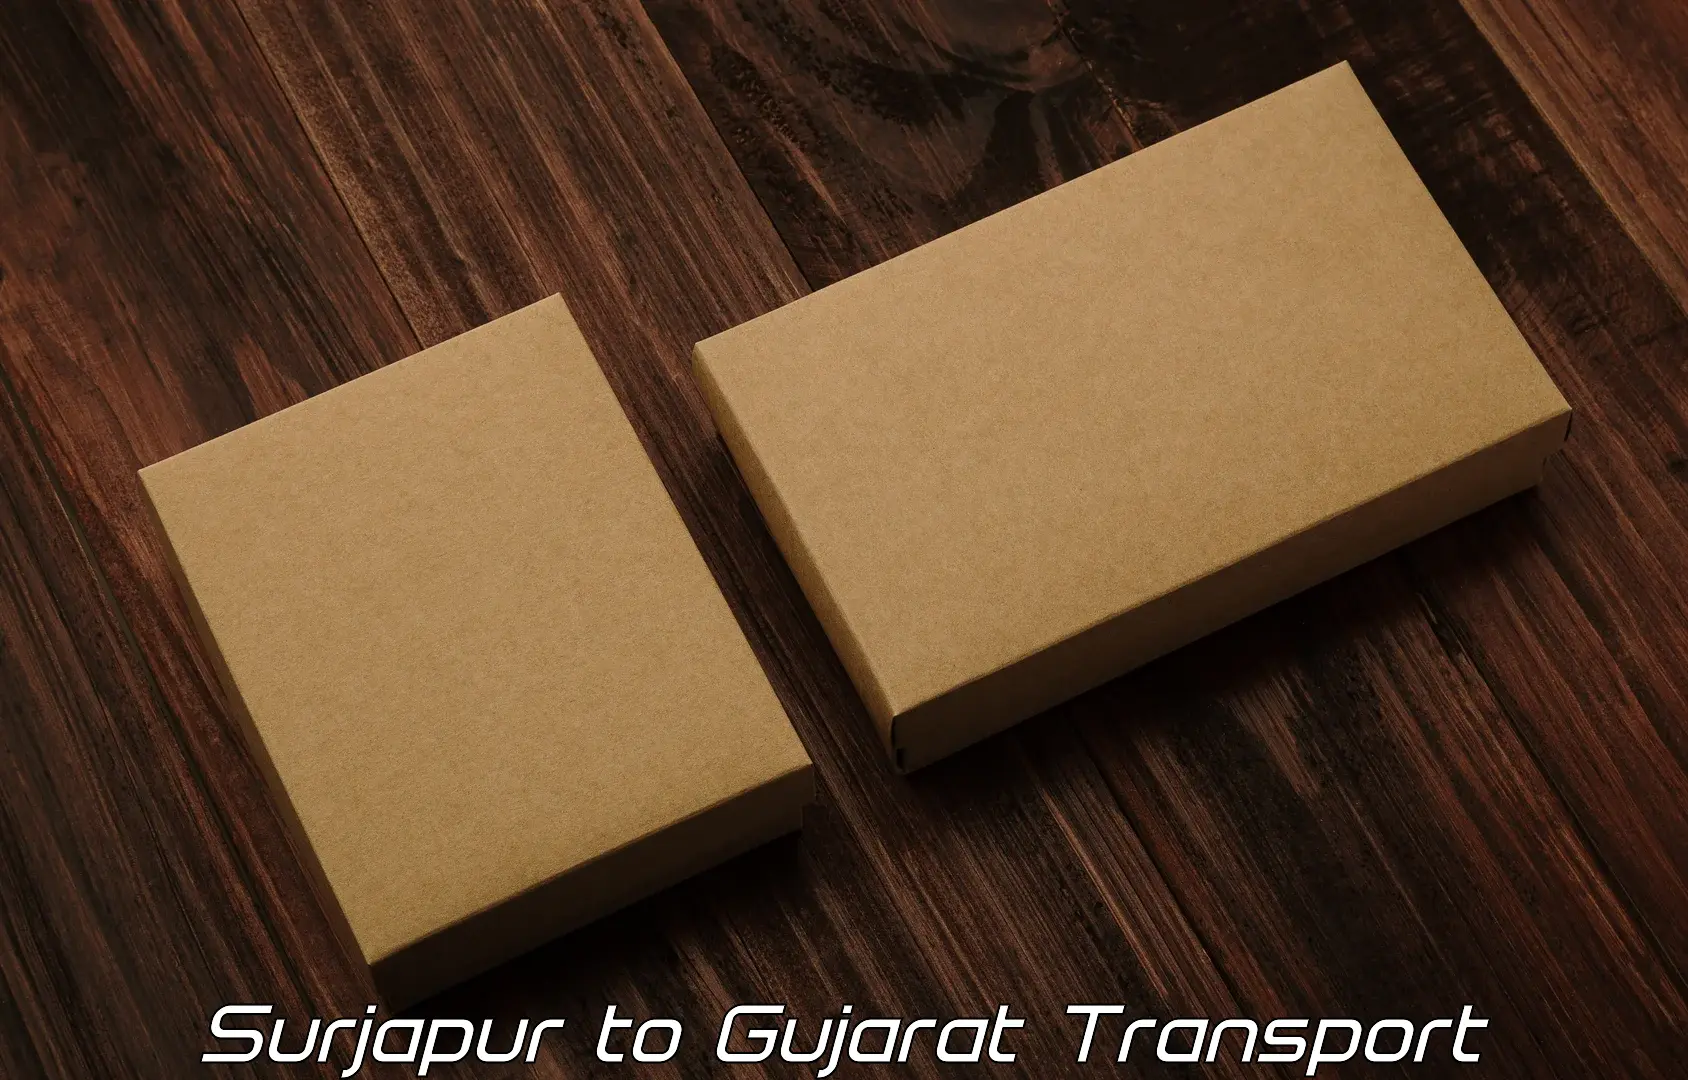 Transport in sharing Surjapur to Gujarat